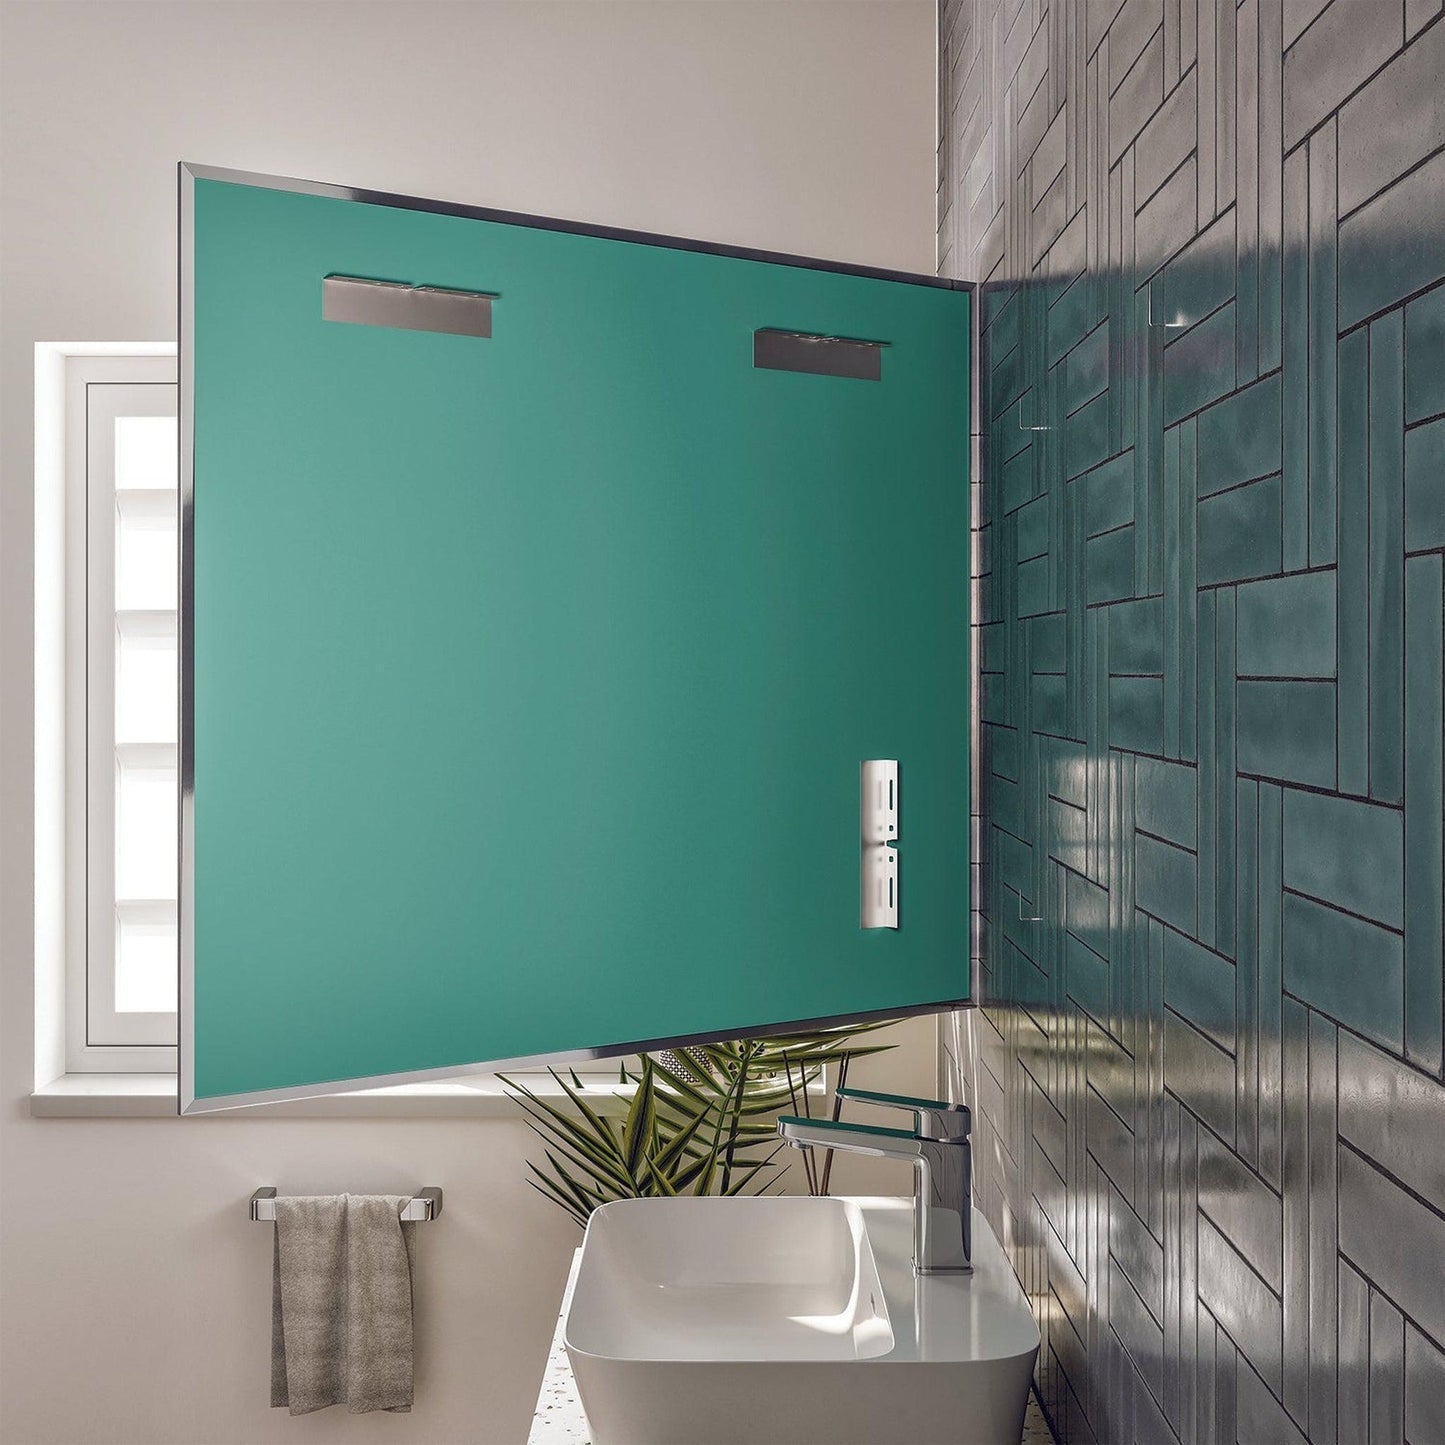 Eviva Sax 36" x 30" Polished Chrome Framed Bathroom Wall-Mounted Mirror